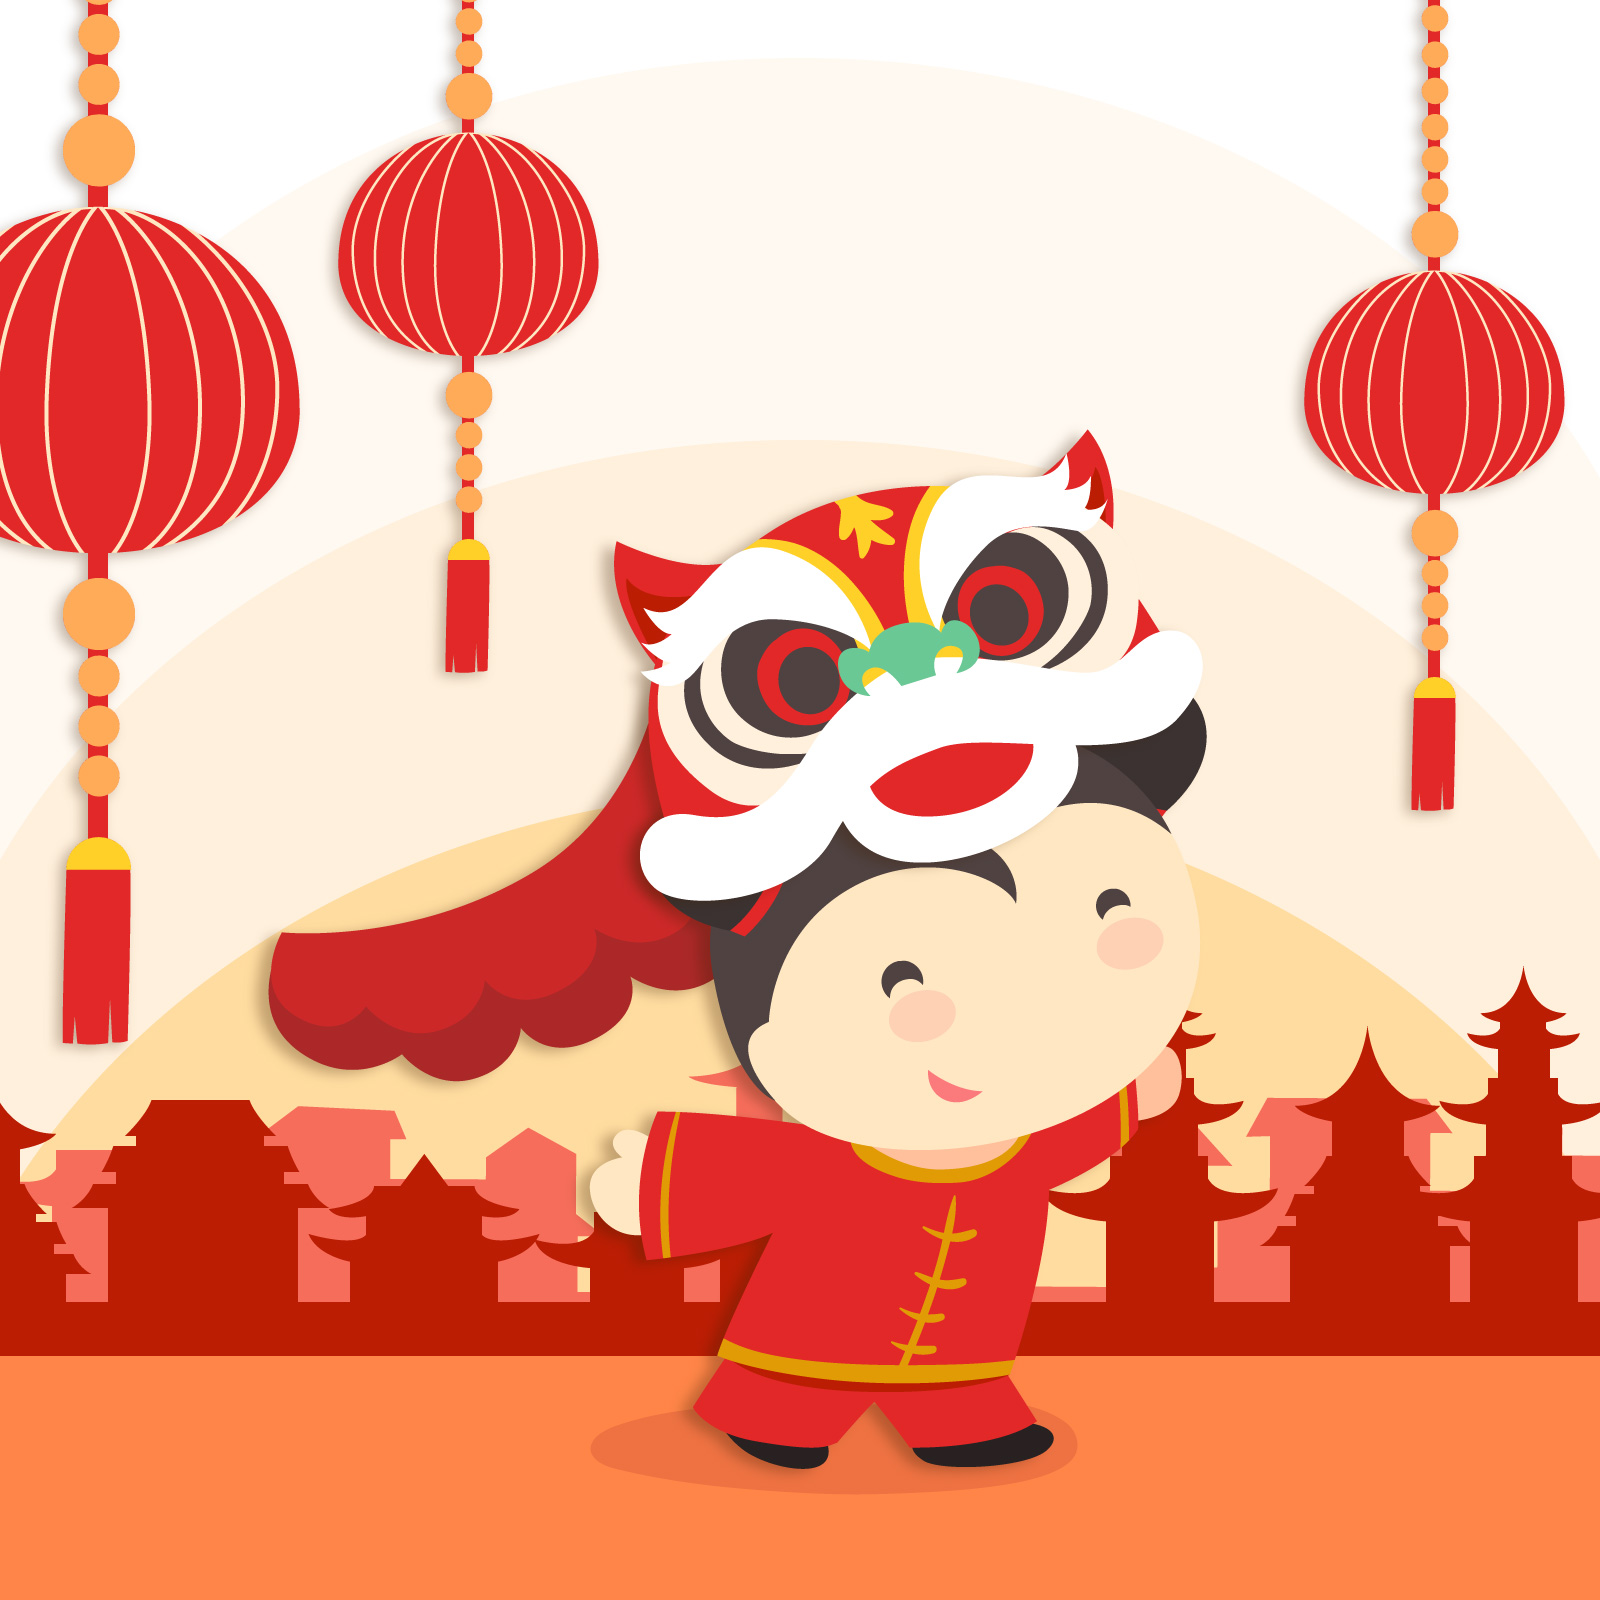 Lovely boy lion dance cartoon image - China Illustrations Vectors AI ESP Free Download